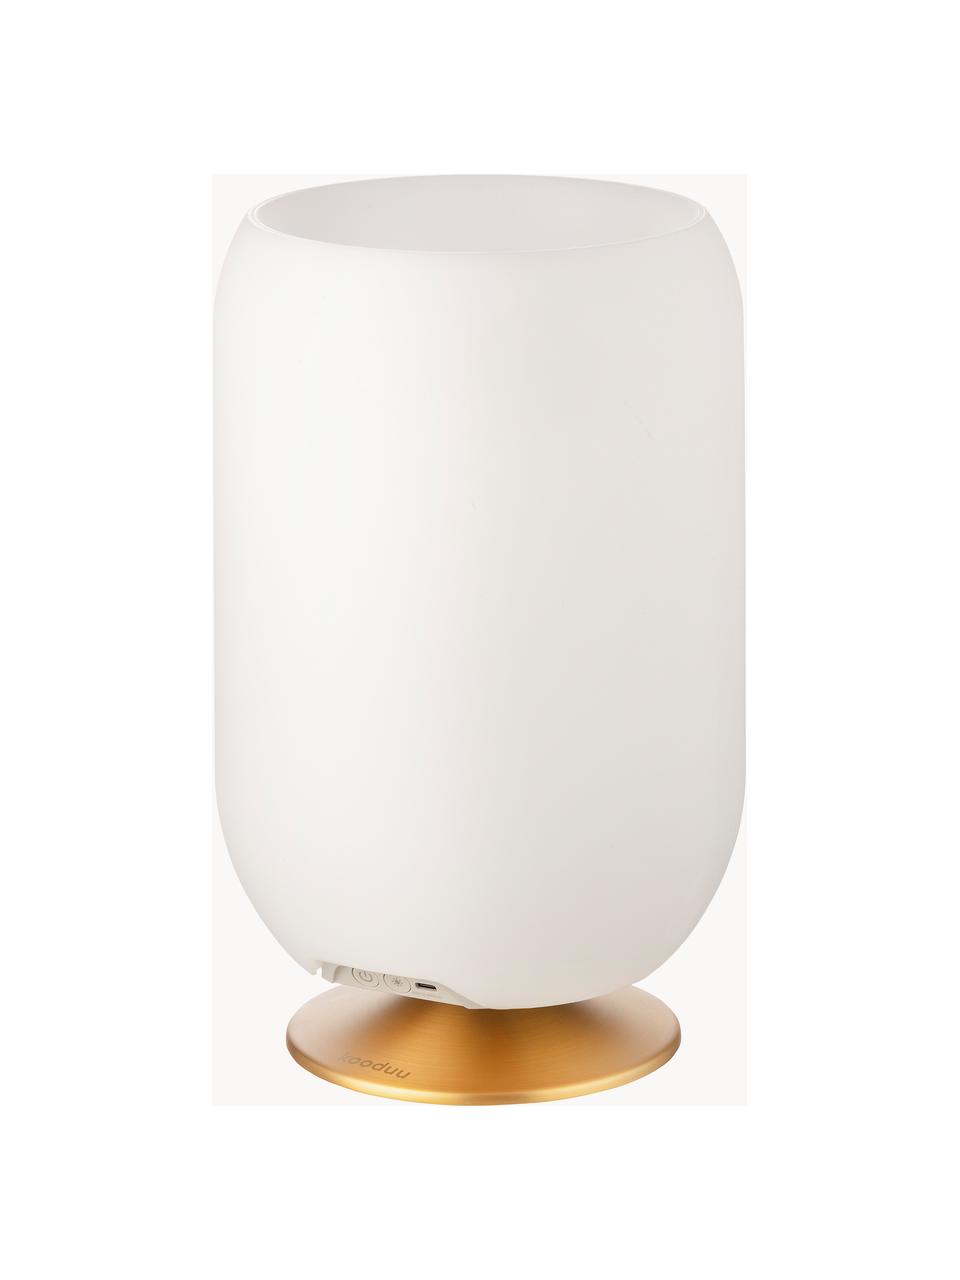 Lampada da tavolo a LED con luce regolabile e altoparlante Bluetooth Atmos, Paralume: polietilene, Struttura: metallo rivestito, Bianco, dorato, Ø 22 x Alt. 37 cm